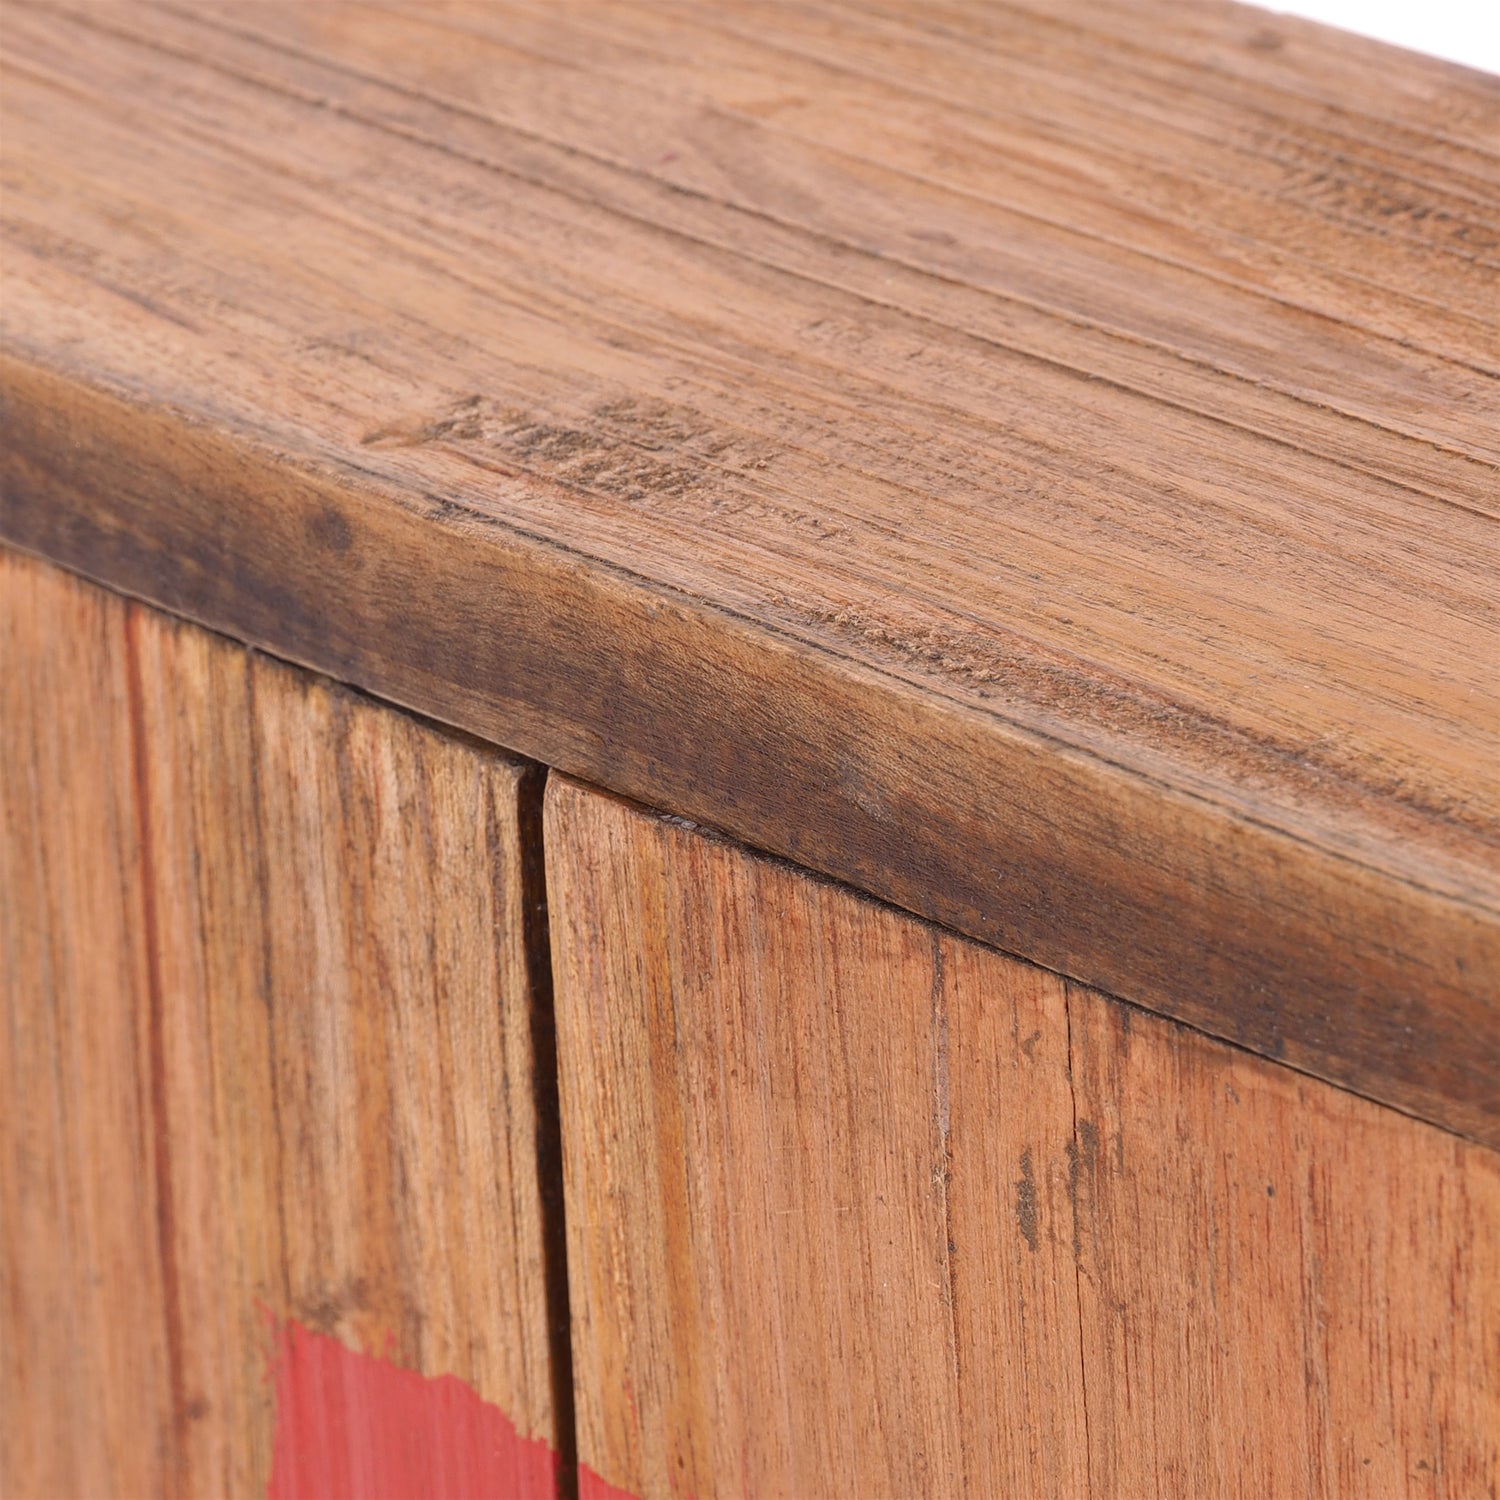 VINTAGE MEDIZINSCHRANK | 35x35x13cm (HxBxT) Wandschrank aus Holz natur